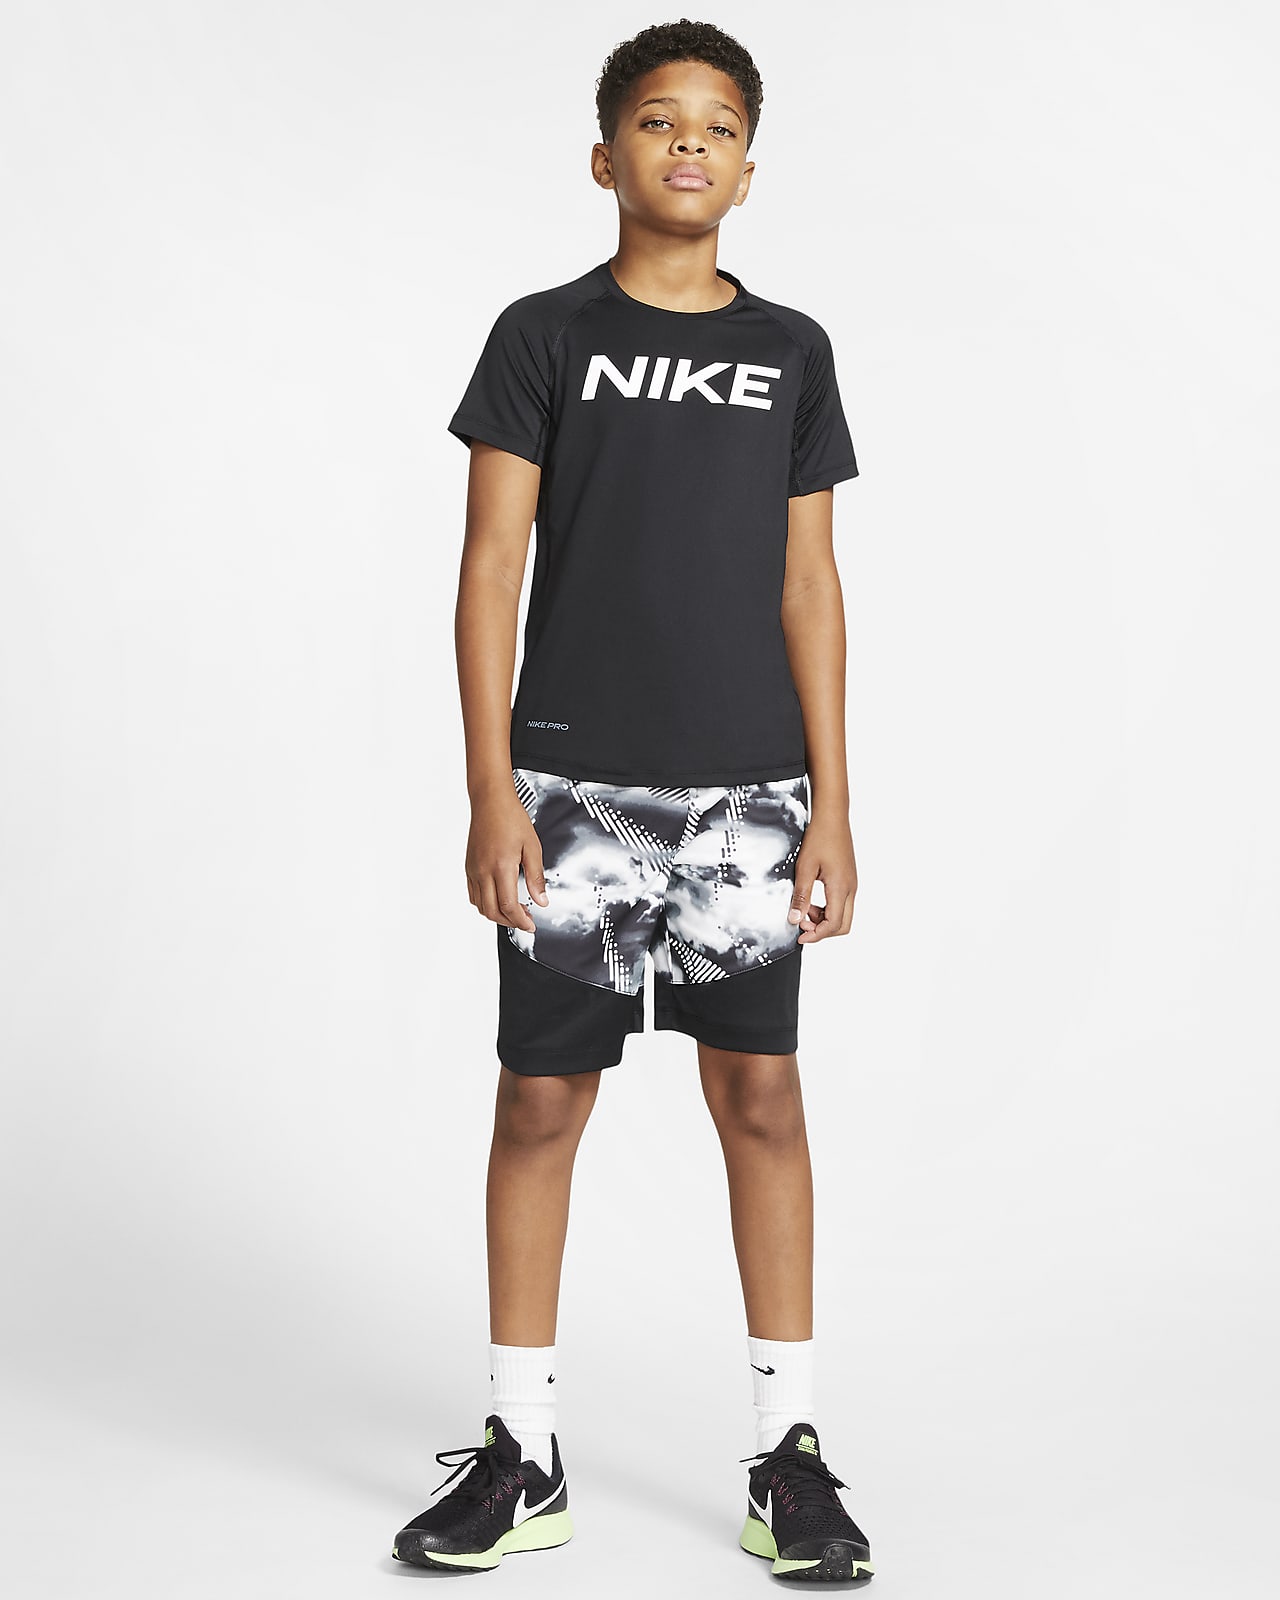 black nike shorts for boys